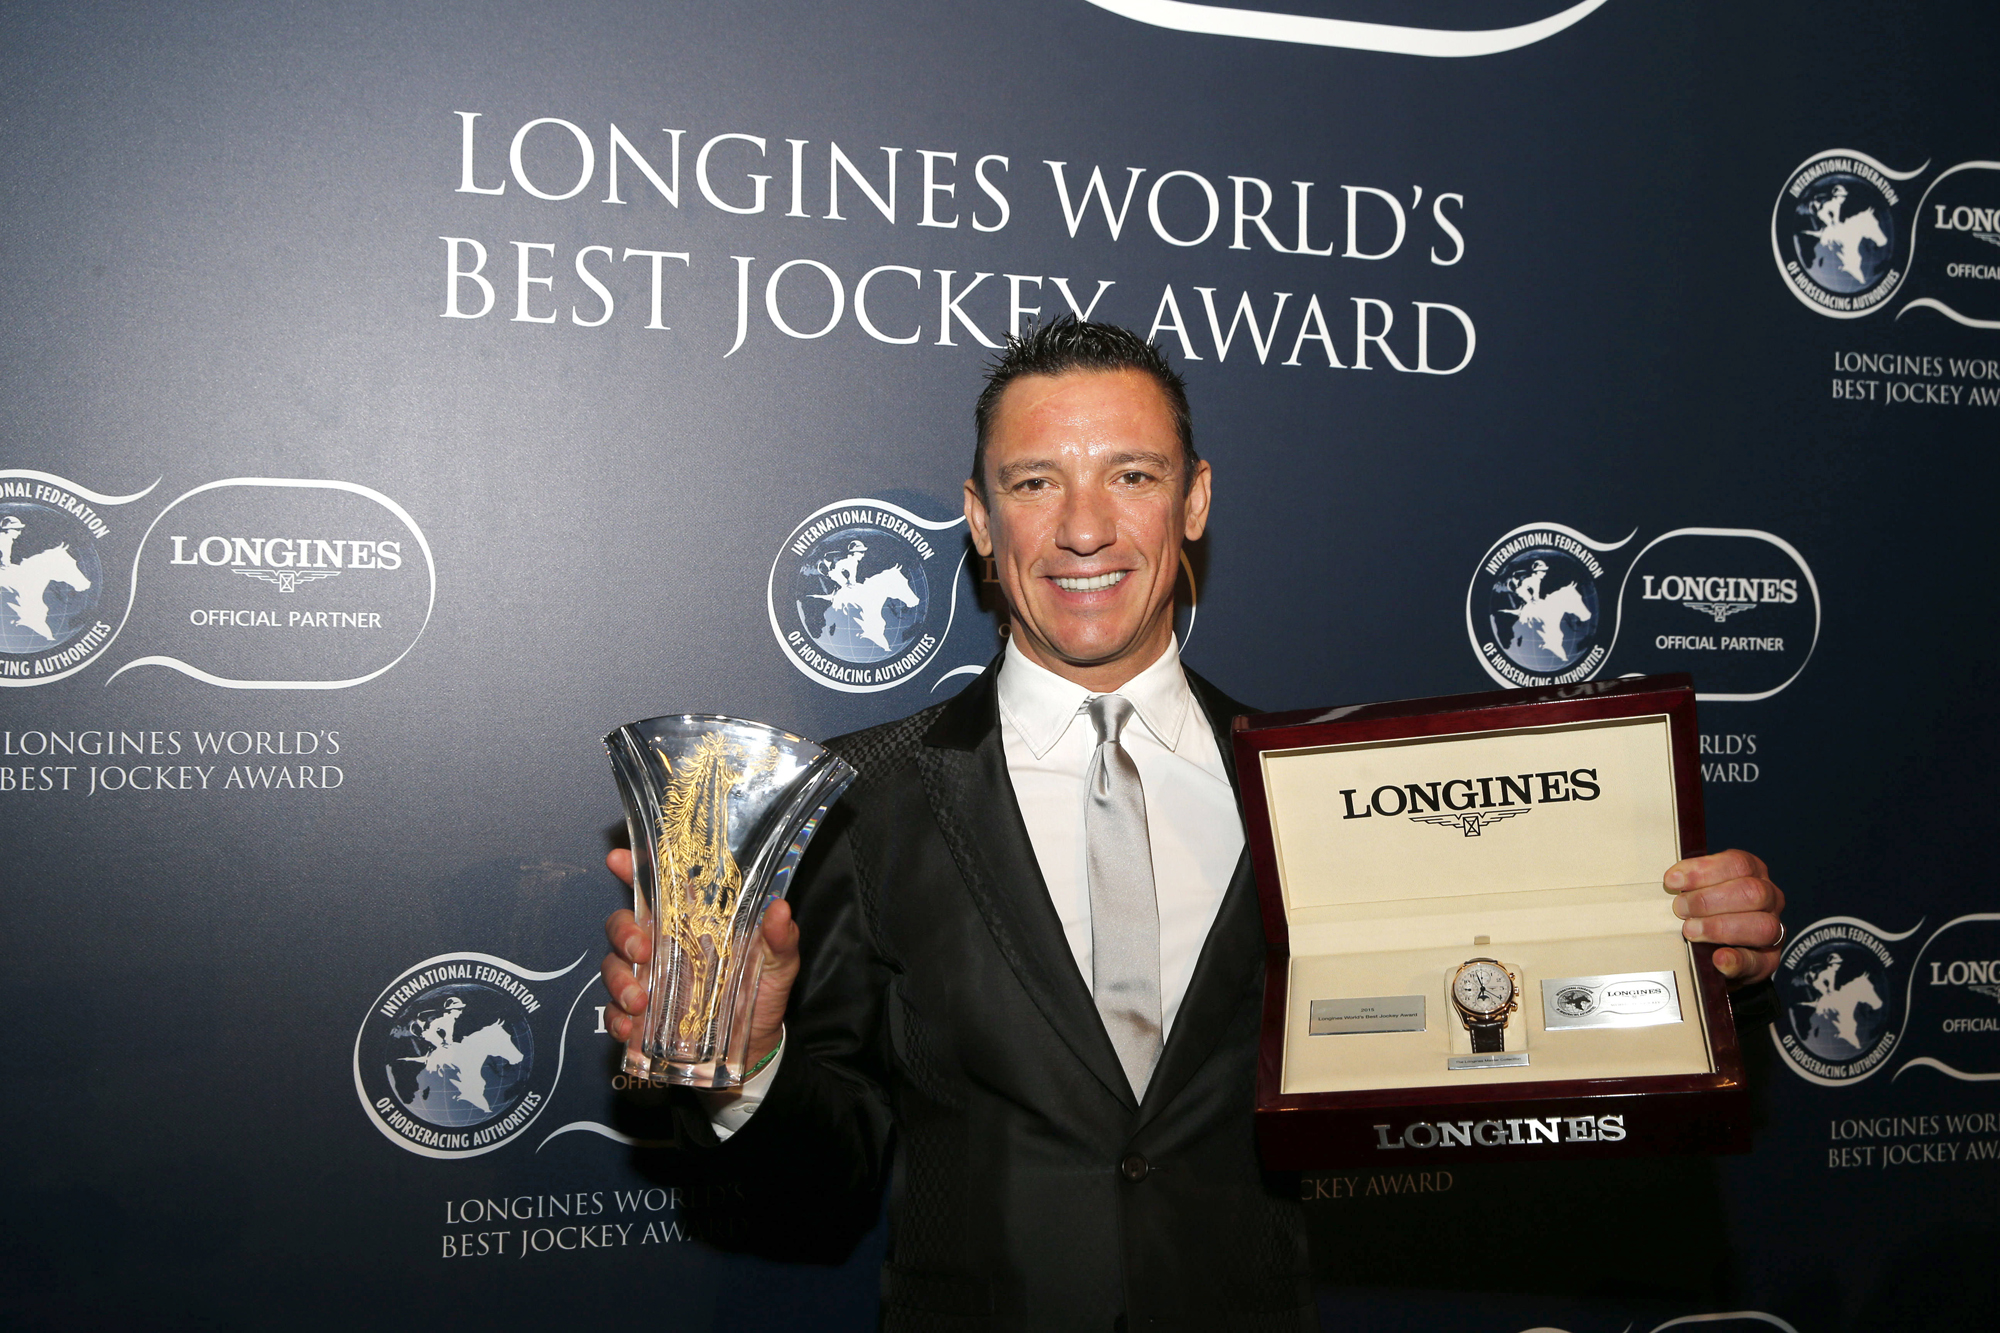 Frankie Dettori won the 2015 Longines World’s Best Jockey Award #stylescmp